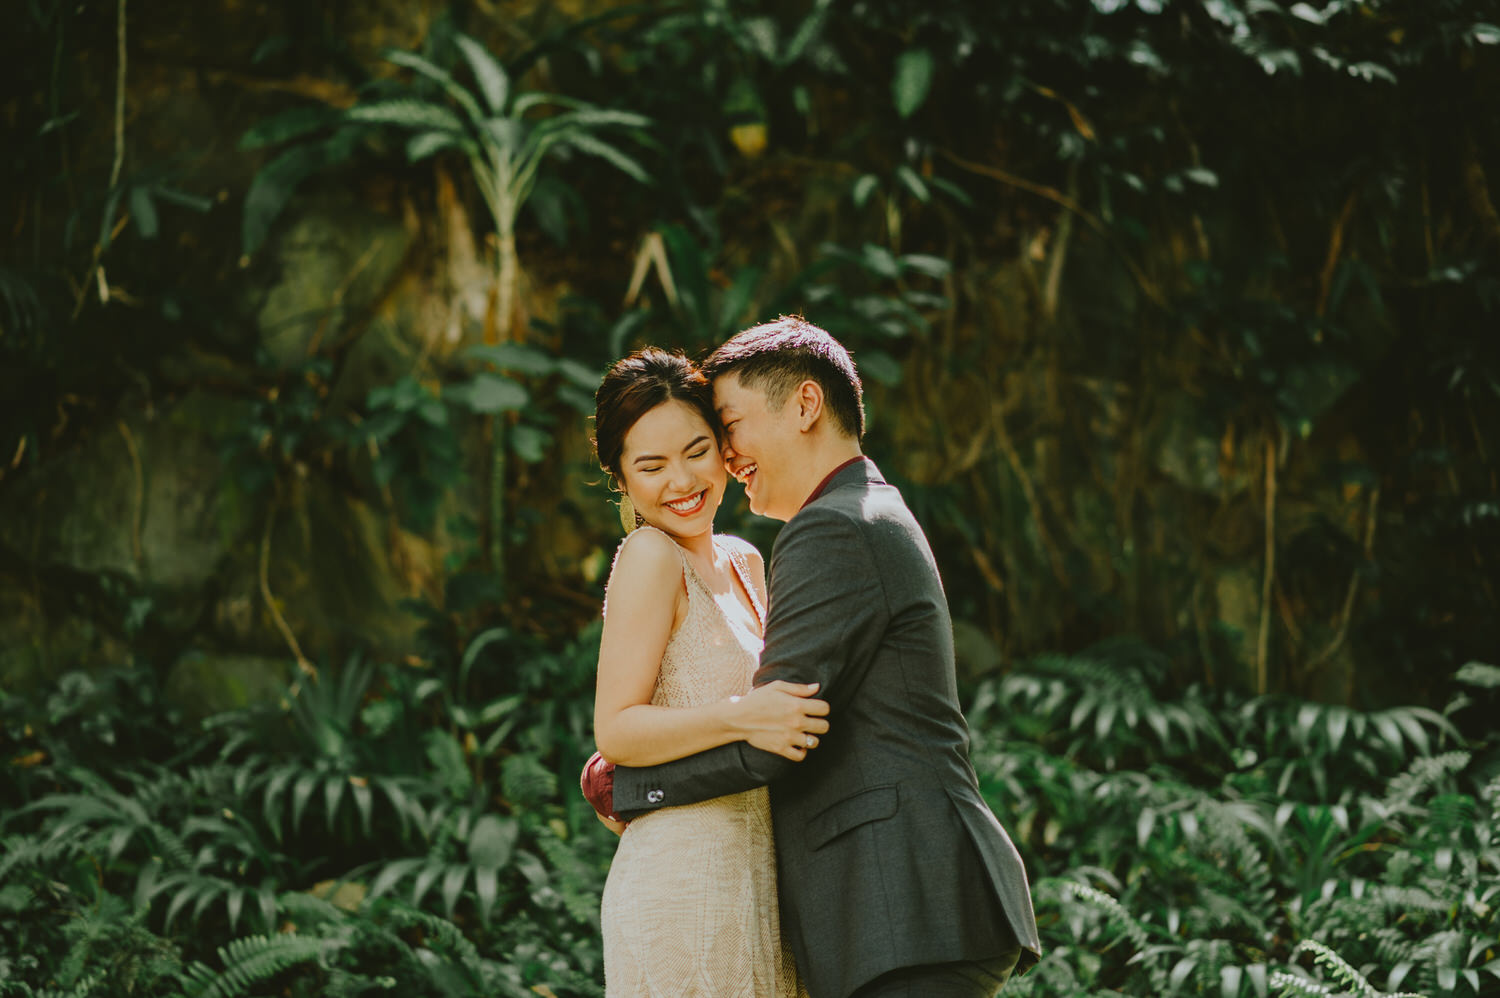 singapore prewedding destination - singapore wedding - diktatphotography - kadek artayasa - nikole + ardika - 15